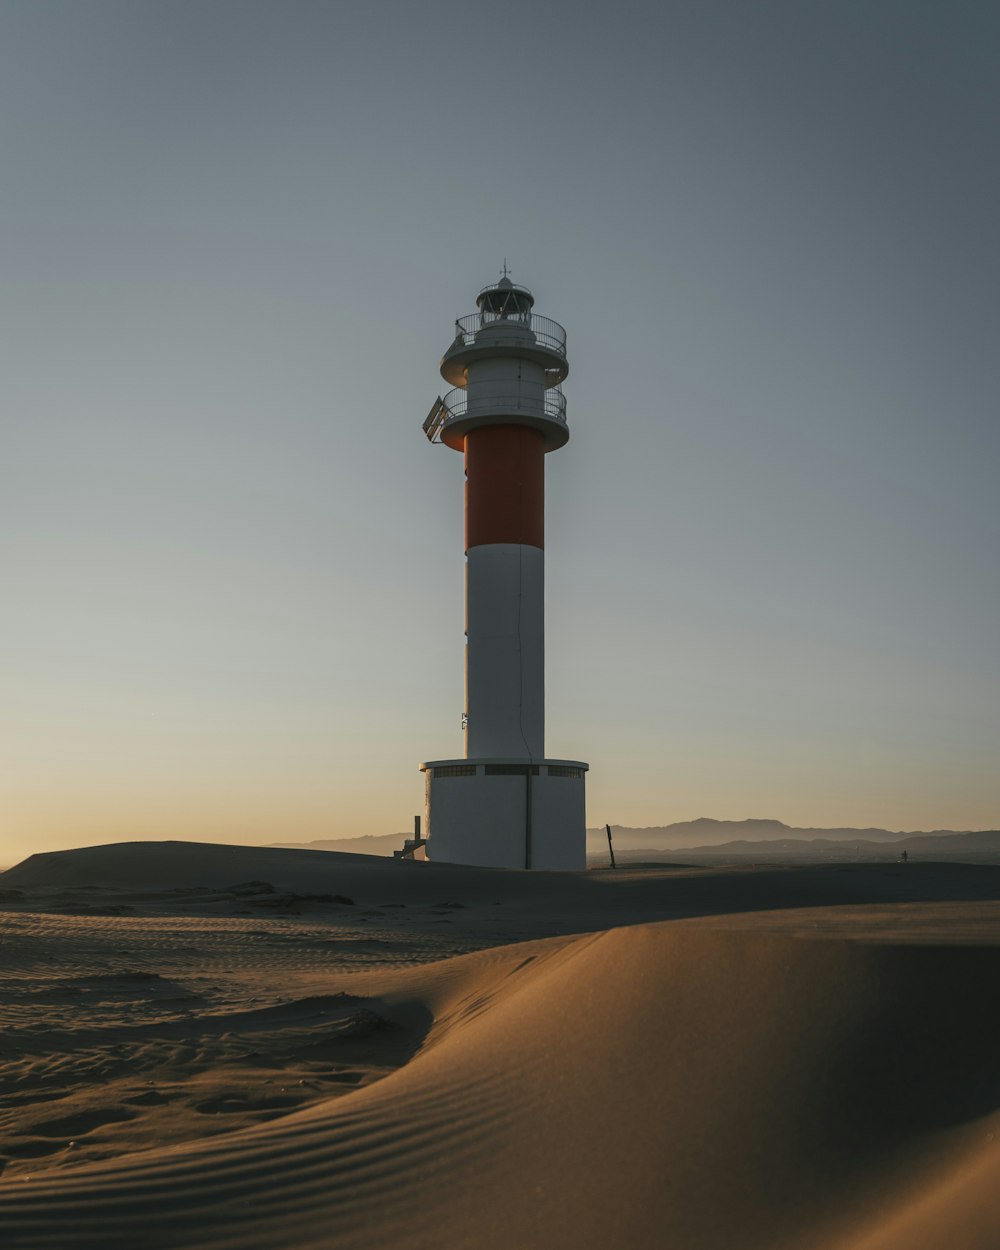 white and red lighthouse on desert